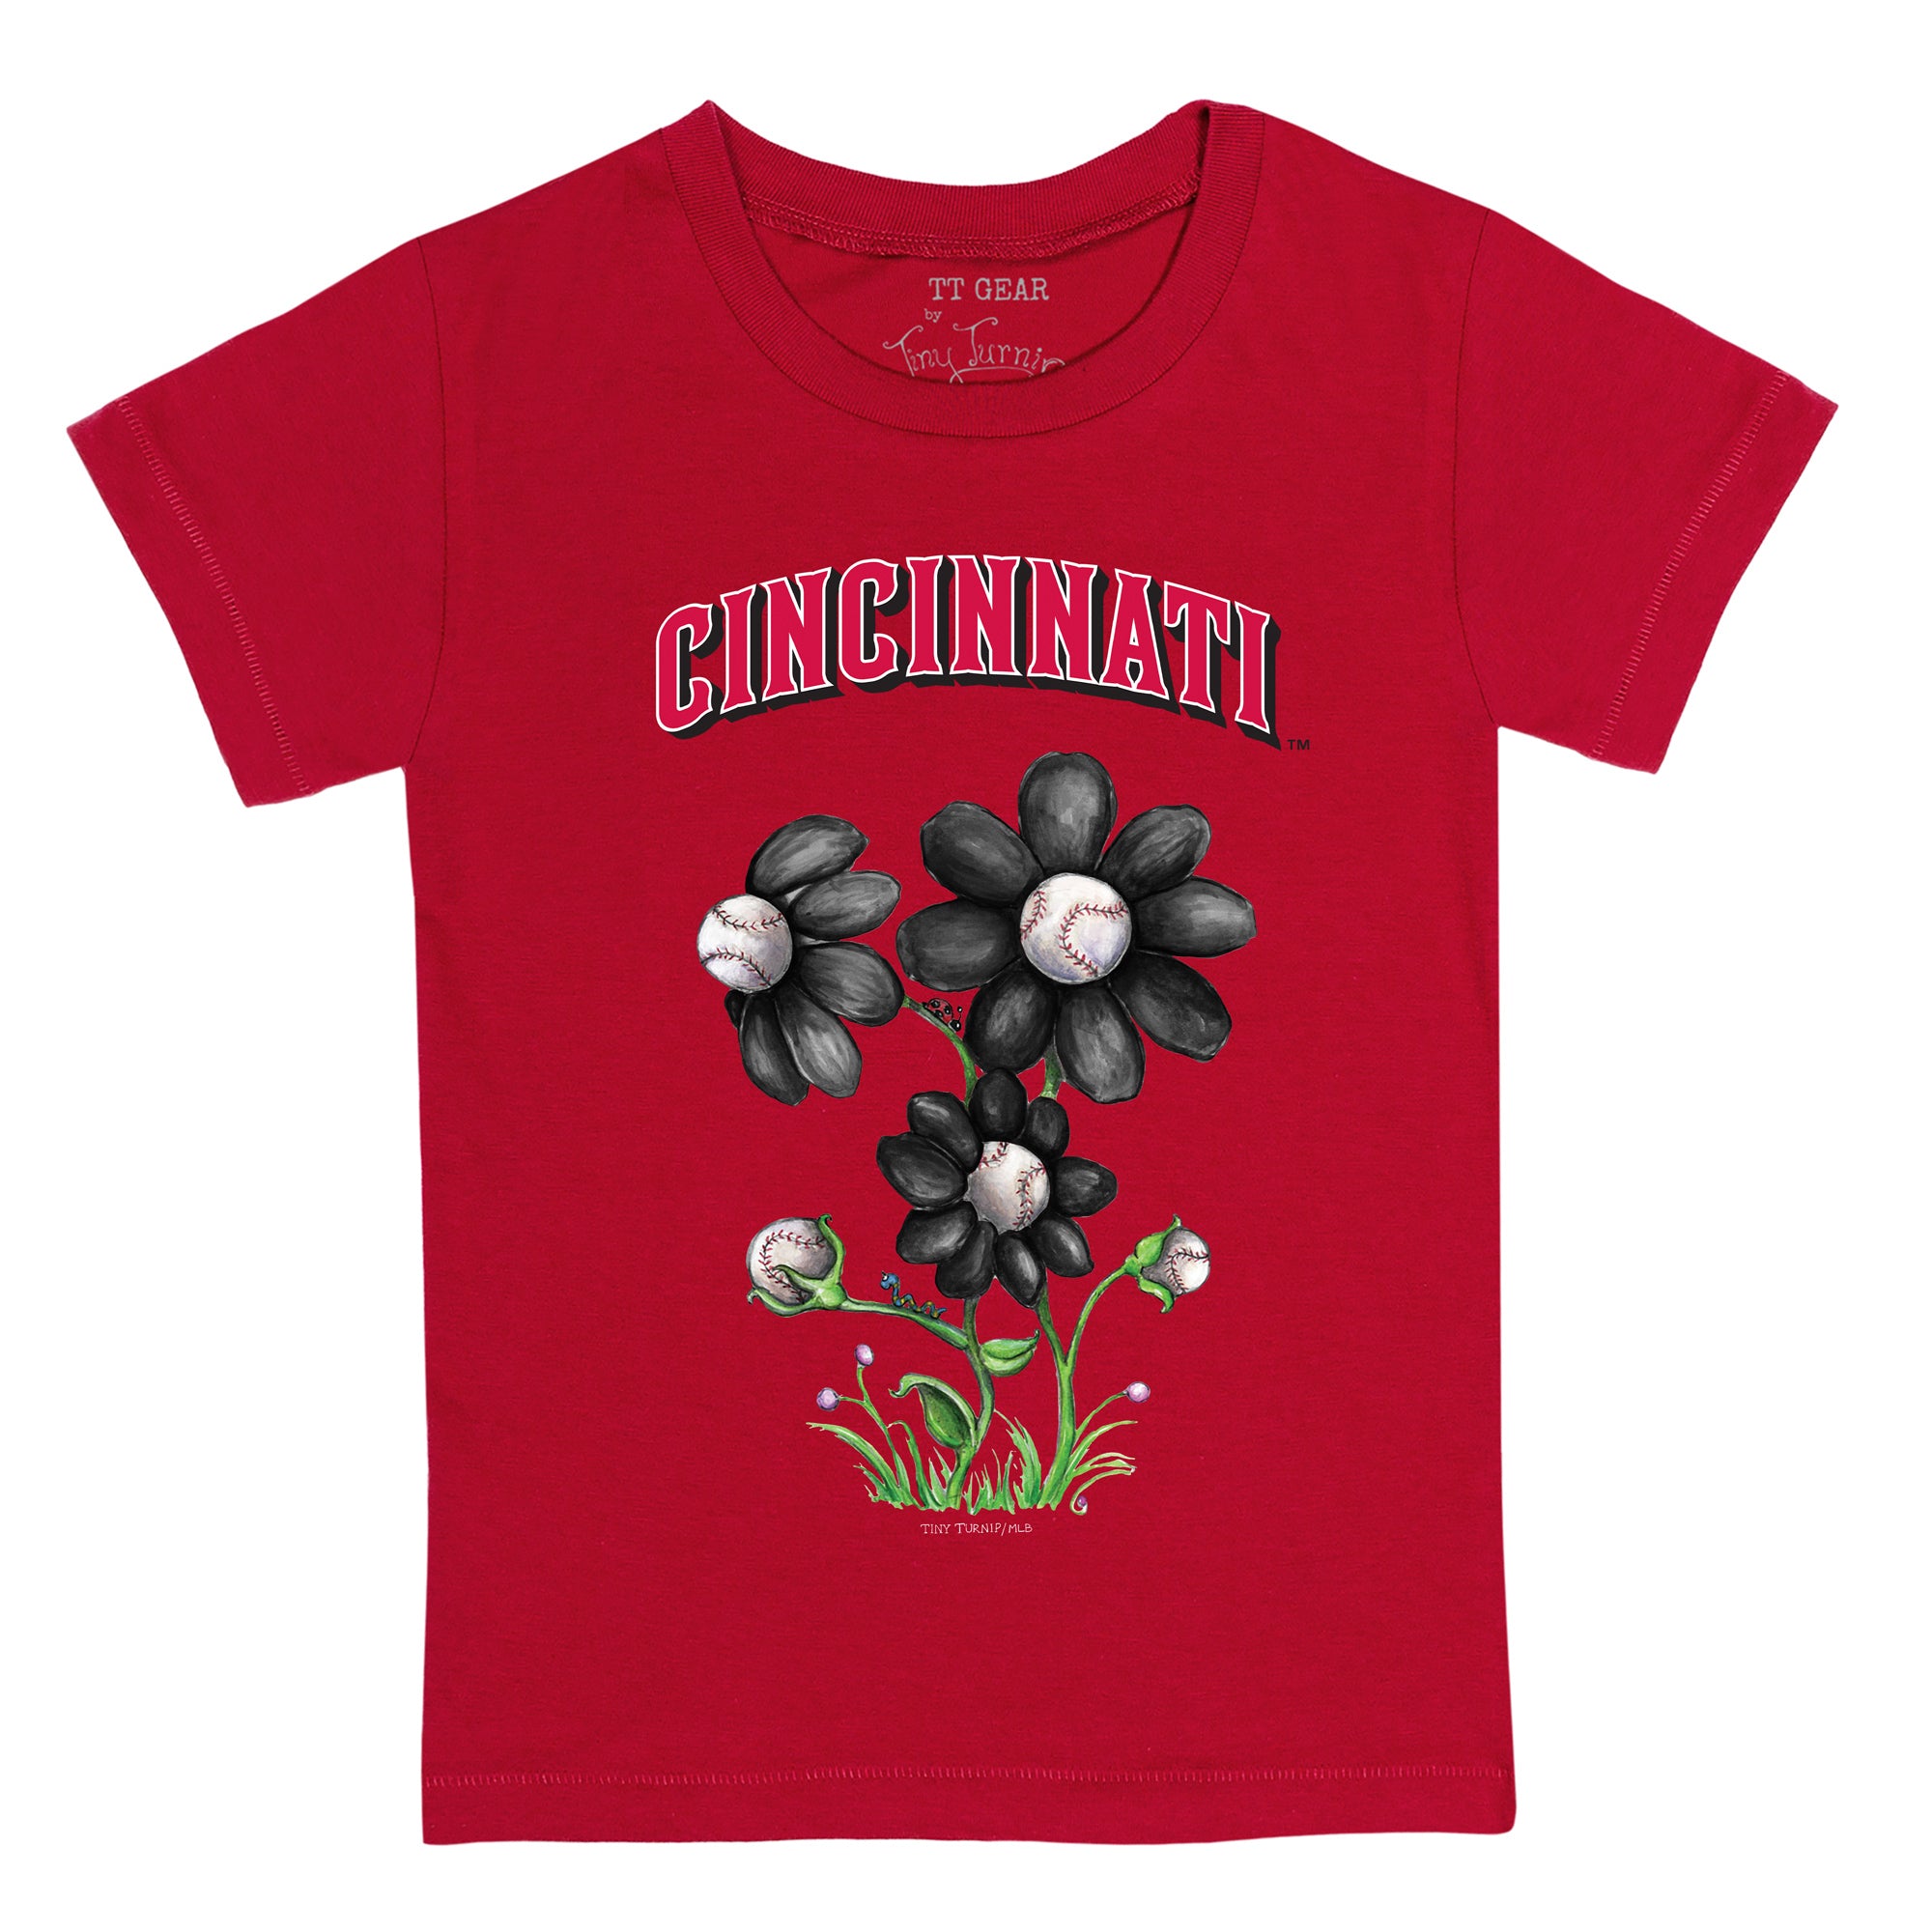 NEW Cincinnati Reds Baseball MLB V-Neck Gray Black Youth T-Shirt